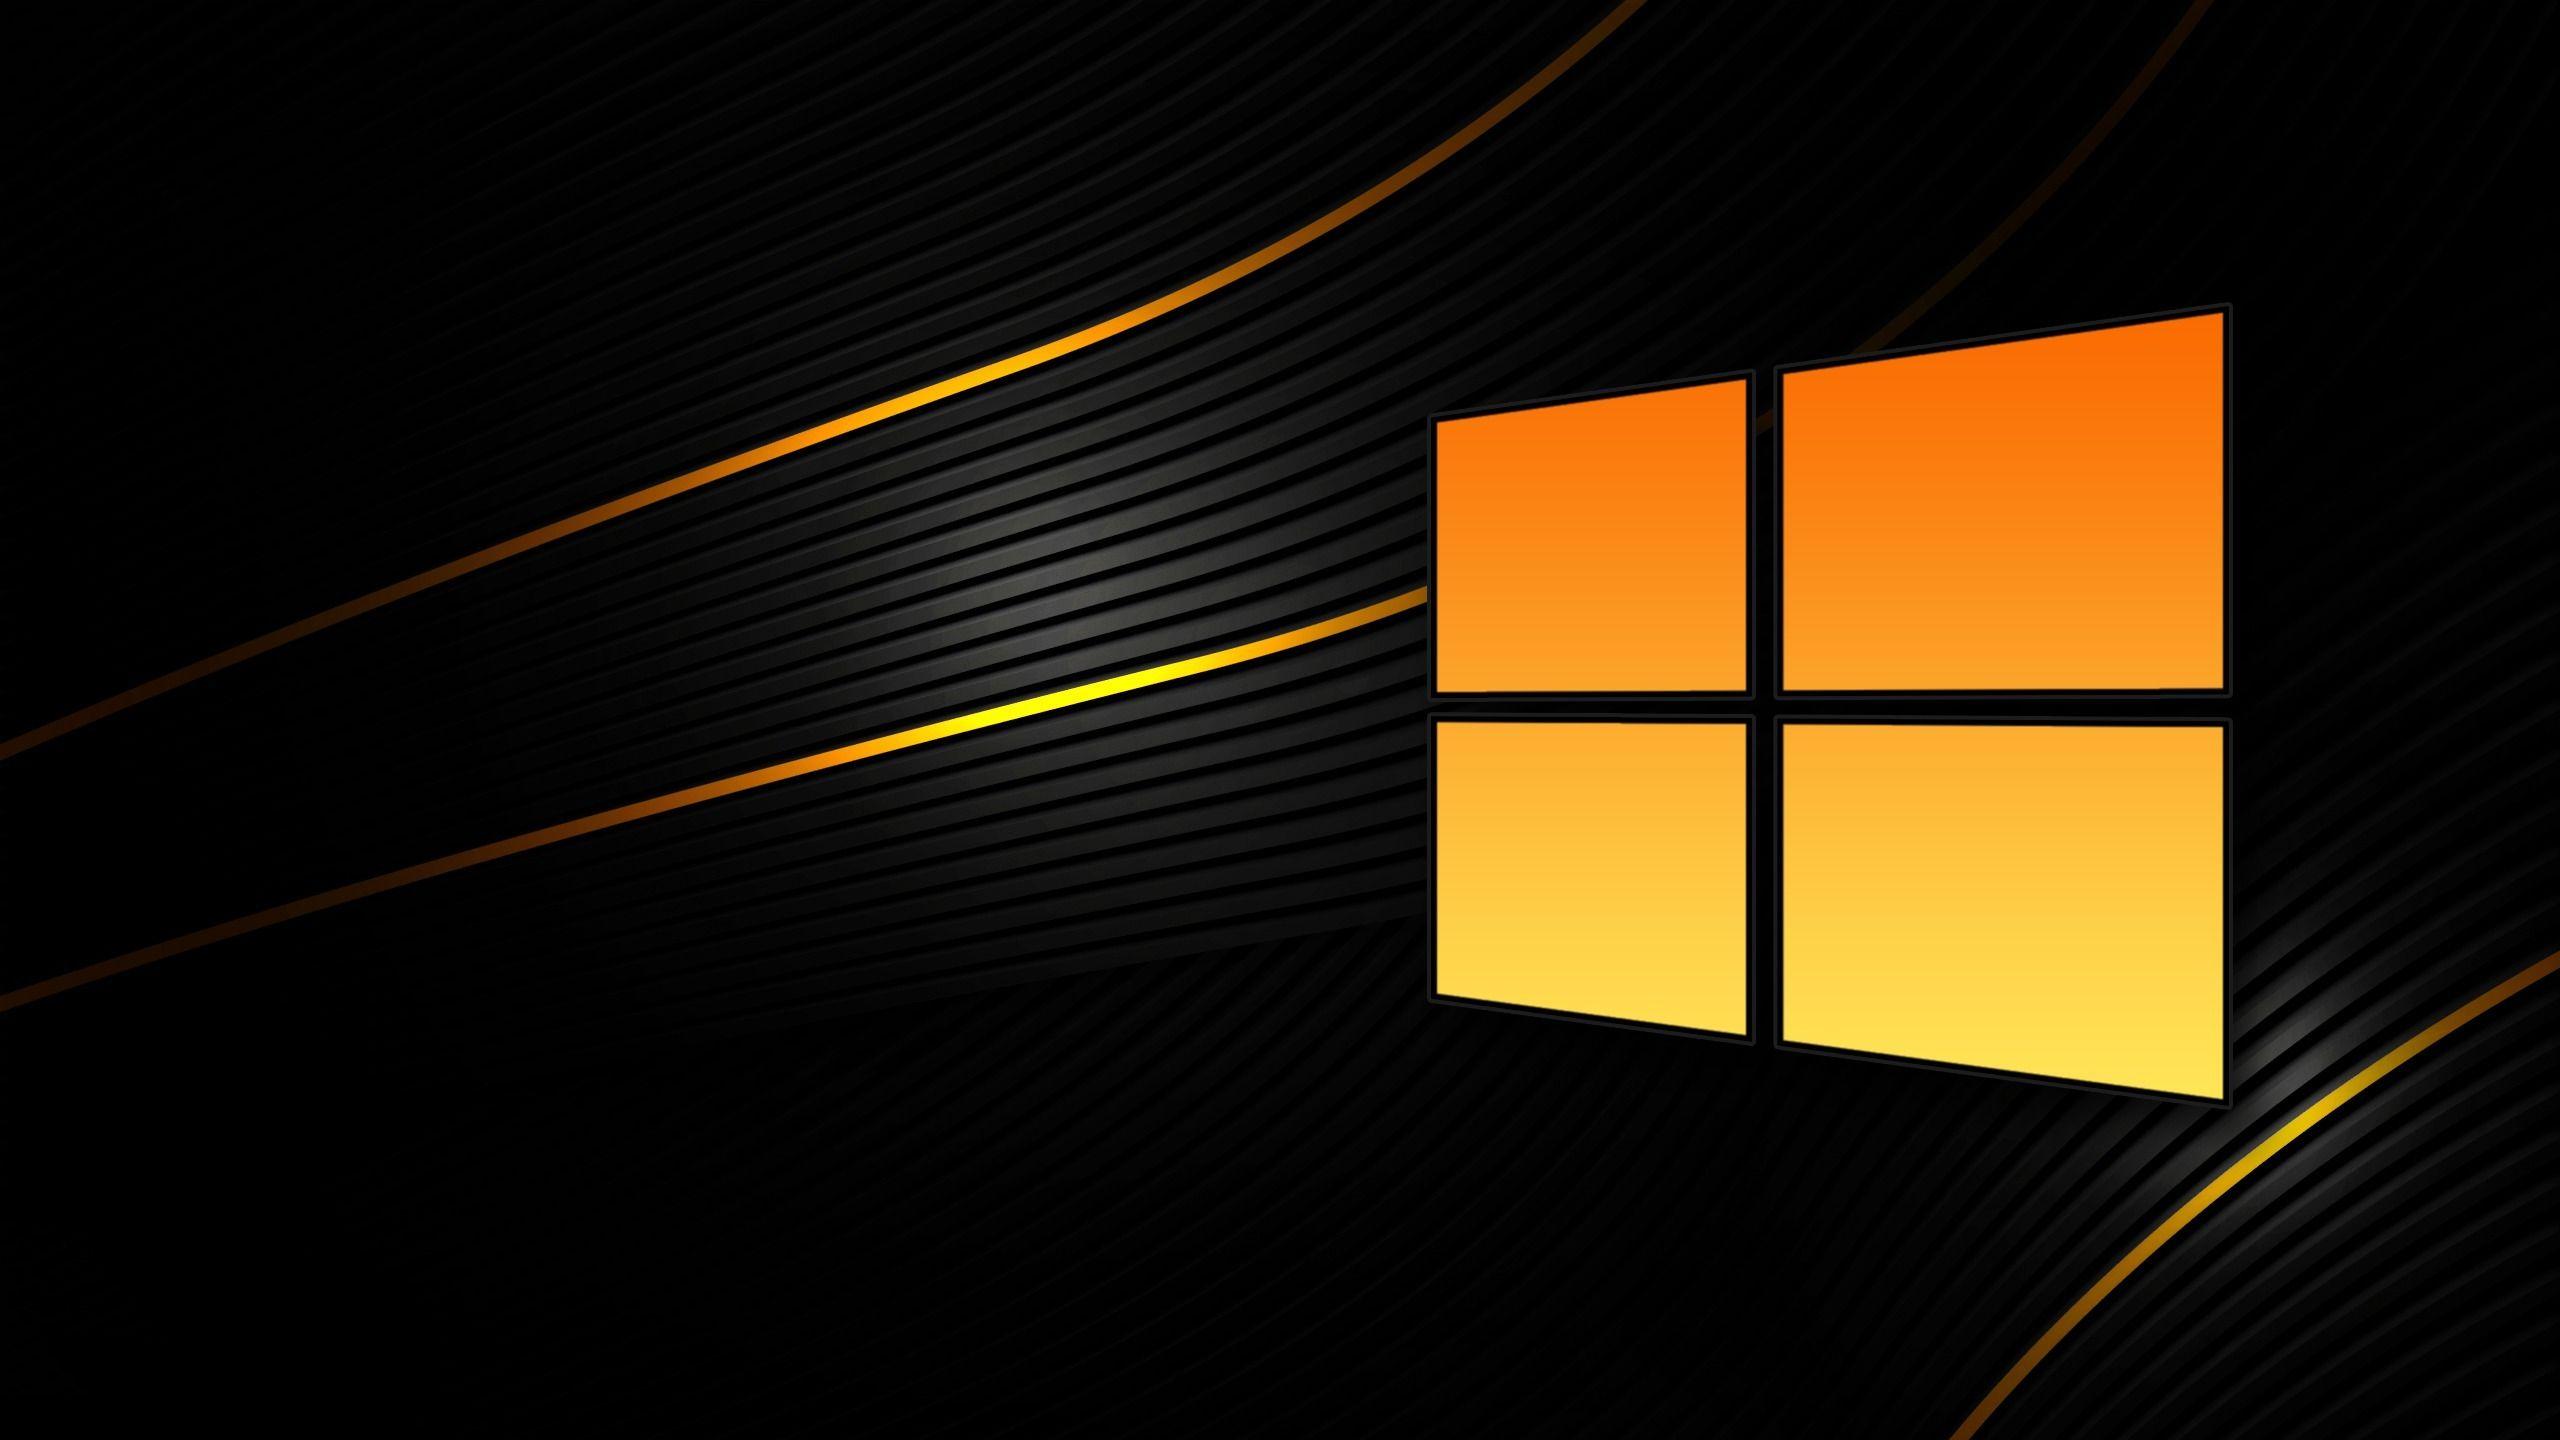 Orange and black Windows 8 free desktop background and wallpaper